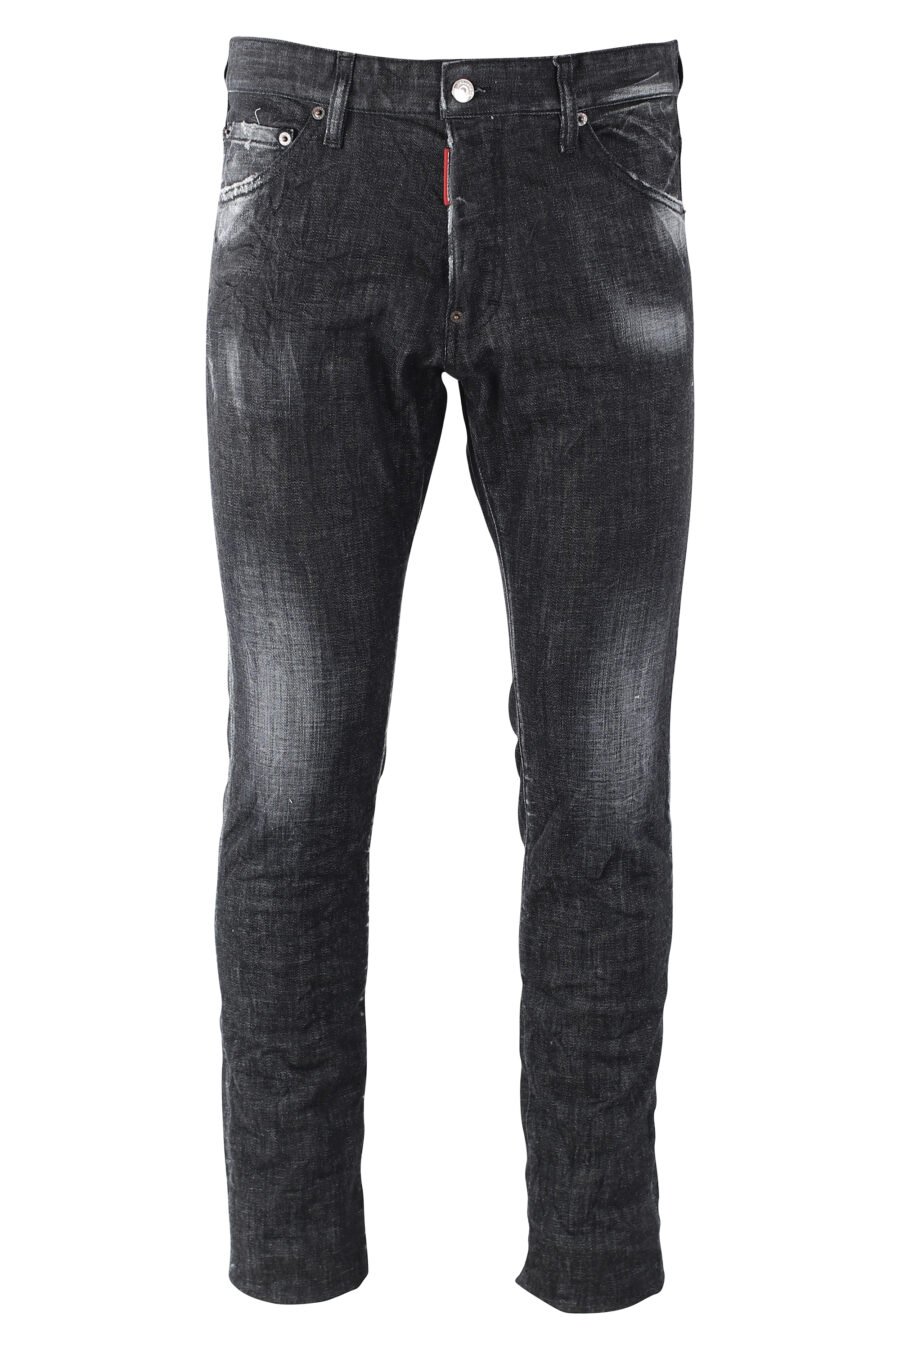 Cool guy jean trousers black semi-worn - IMG 9699